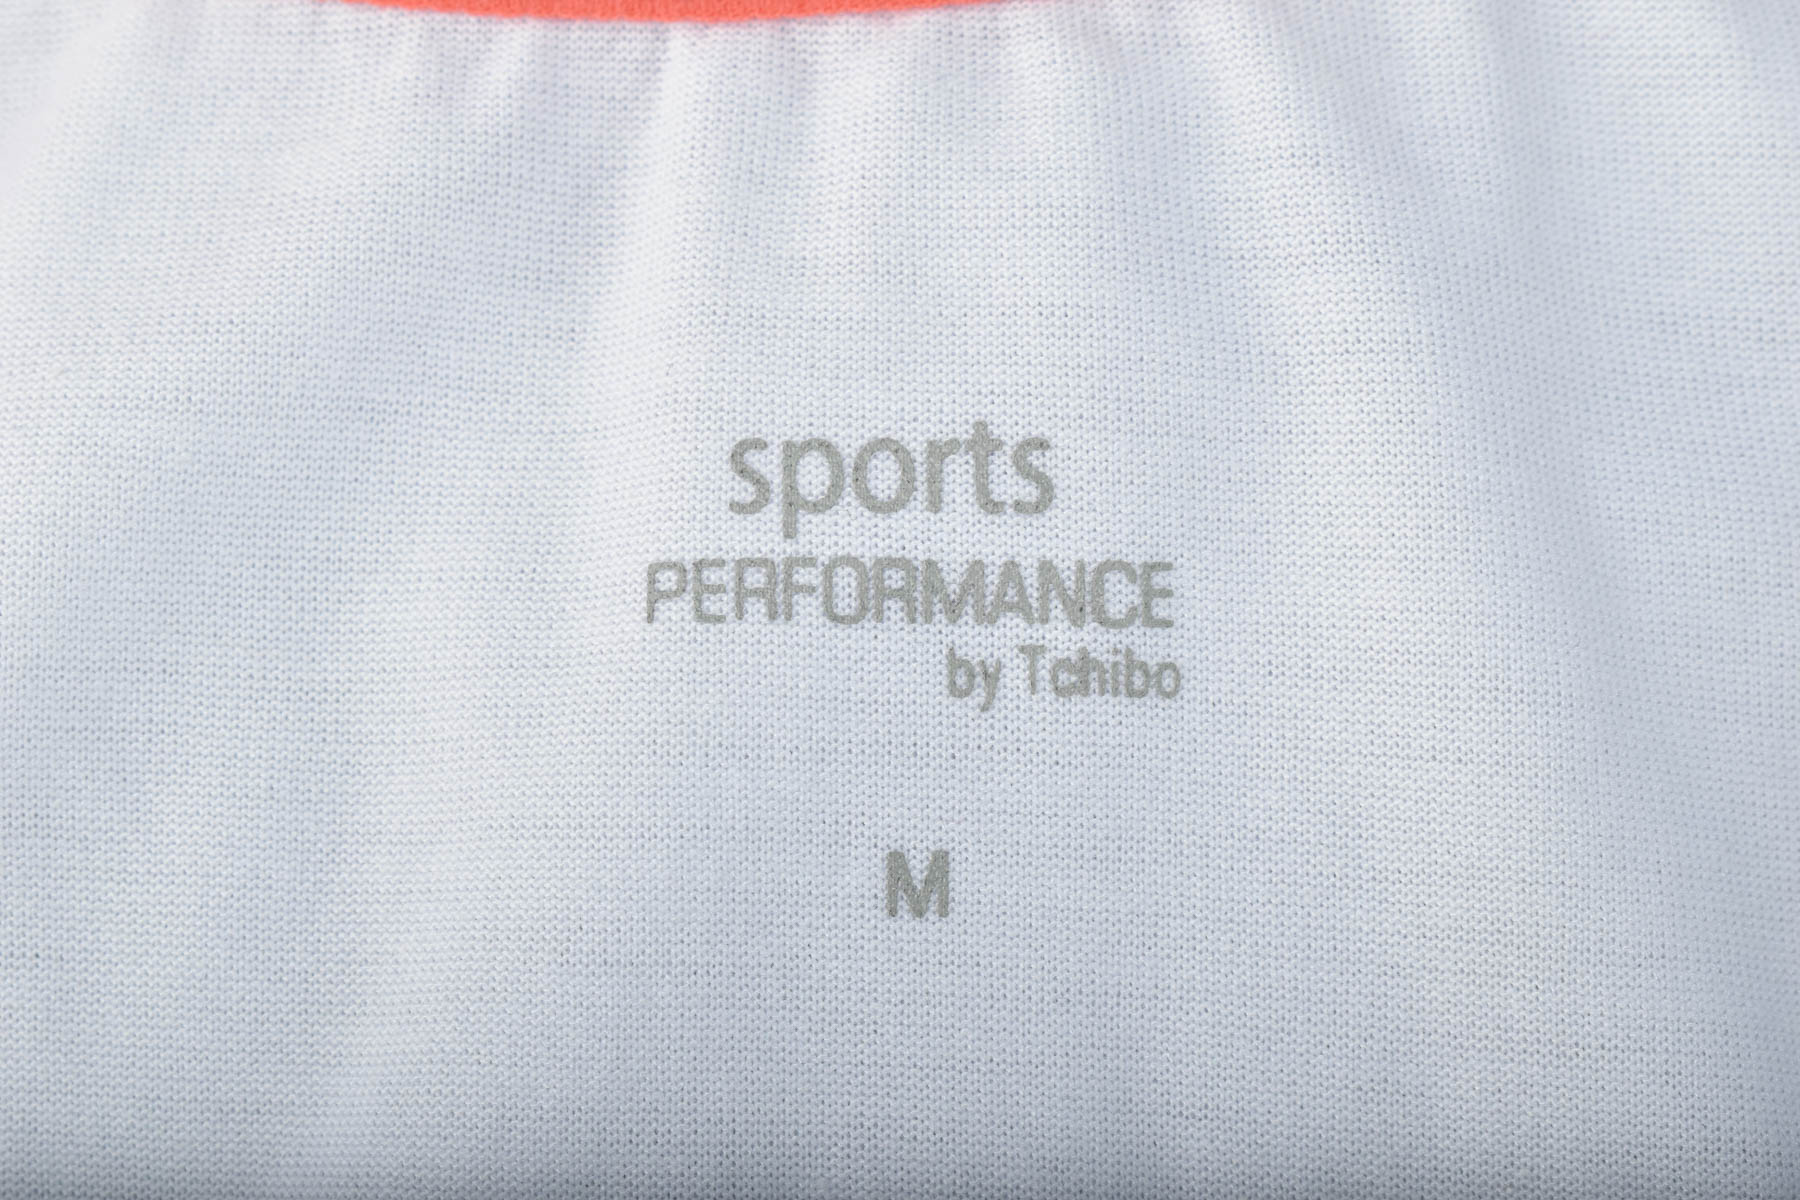 Women's top - Sports PERFORMANCE by Tchibo - 2